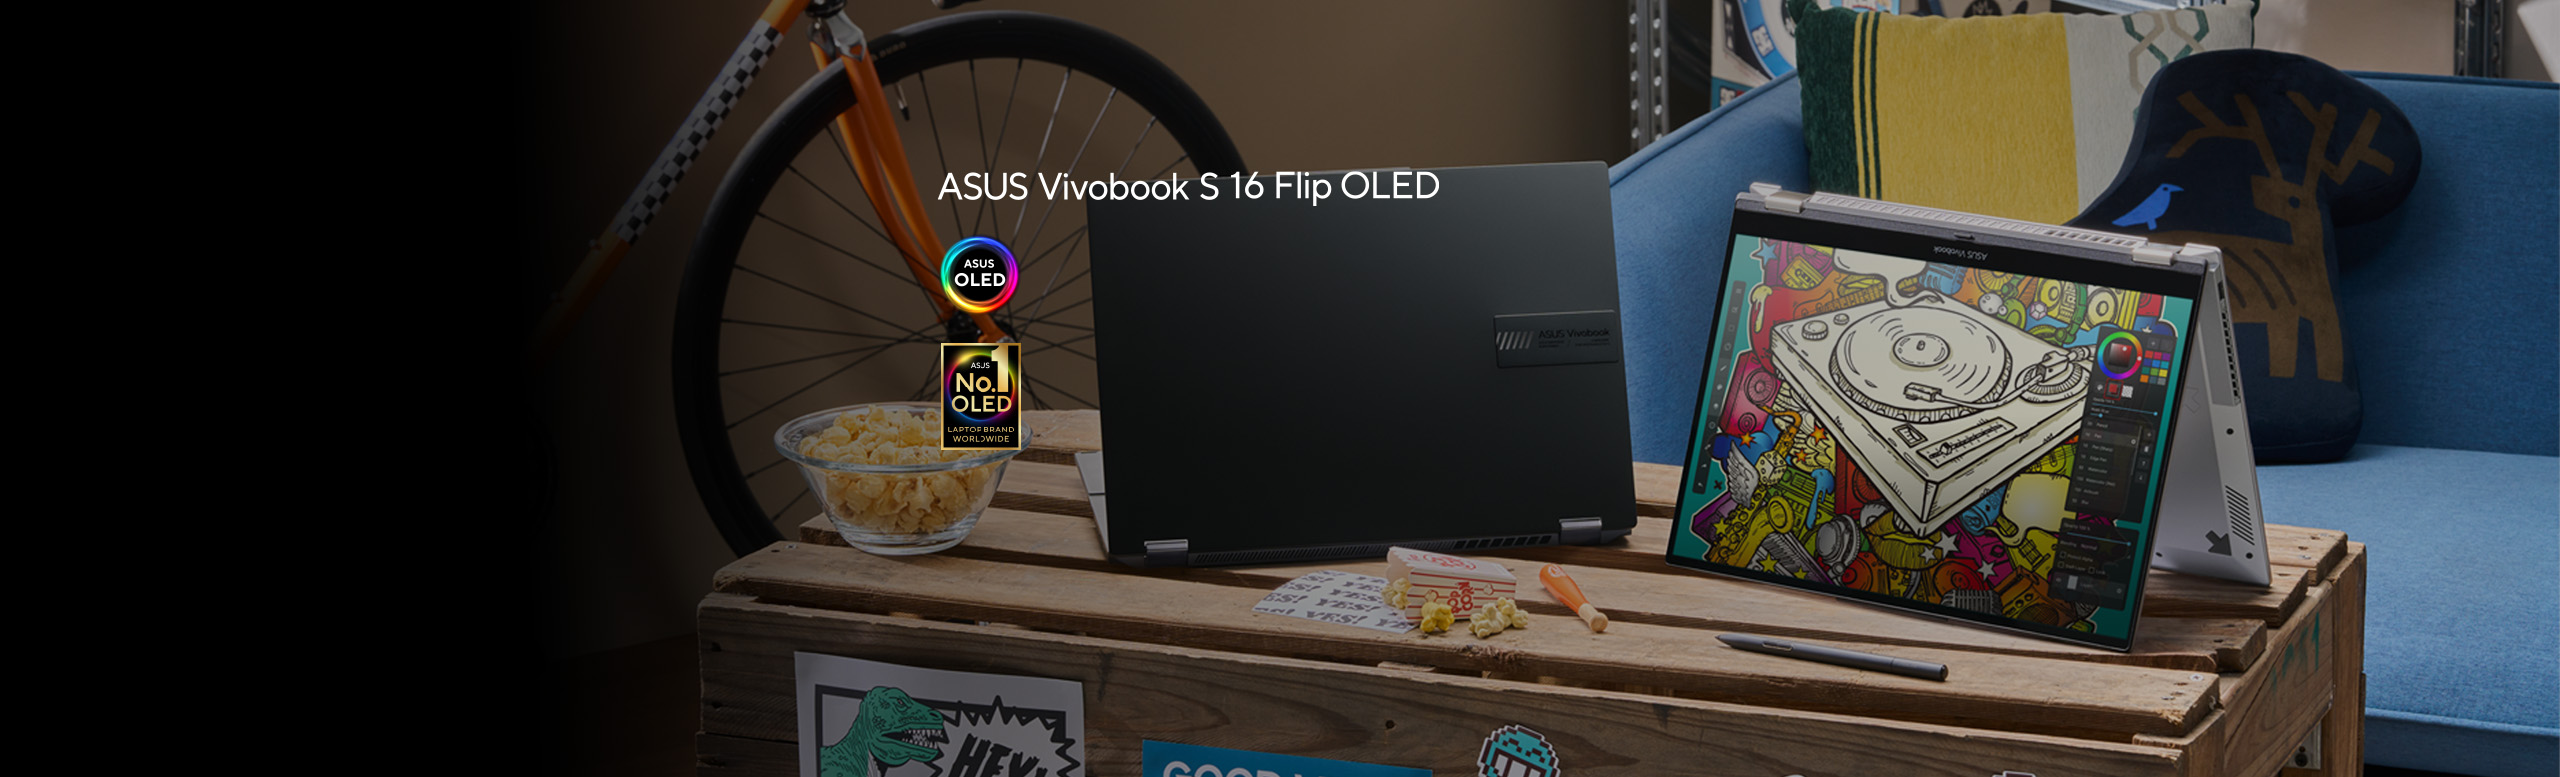 ASUS Vivobook S 16 Flip (TN3604)